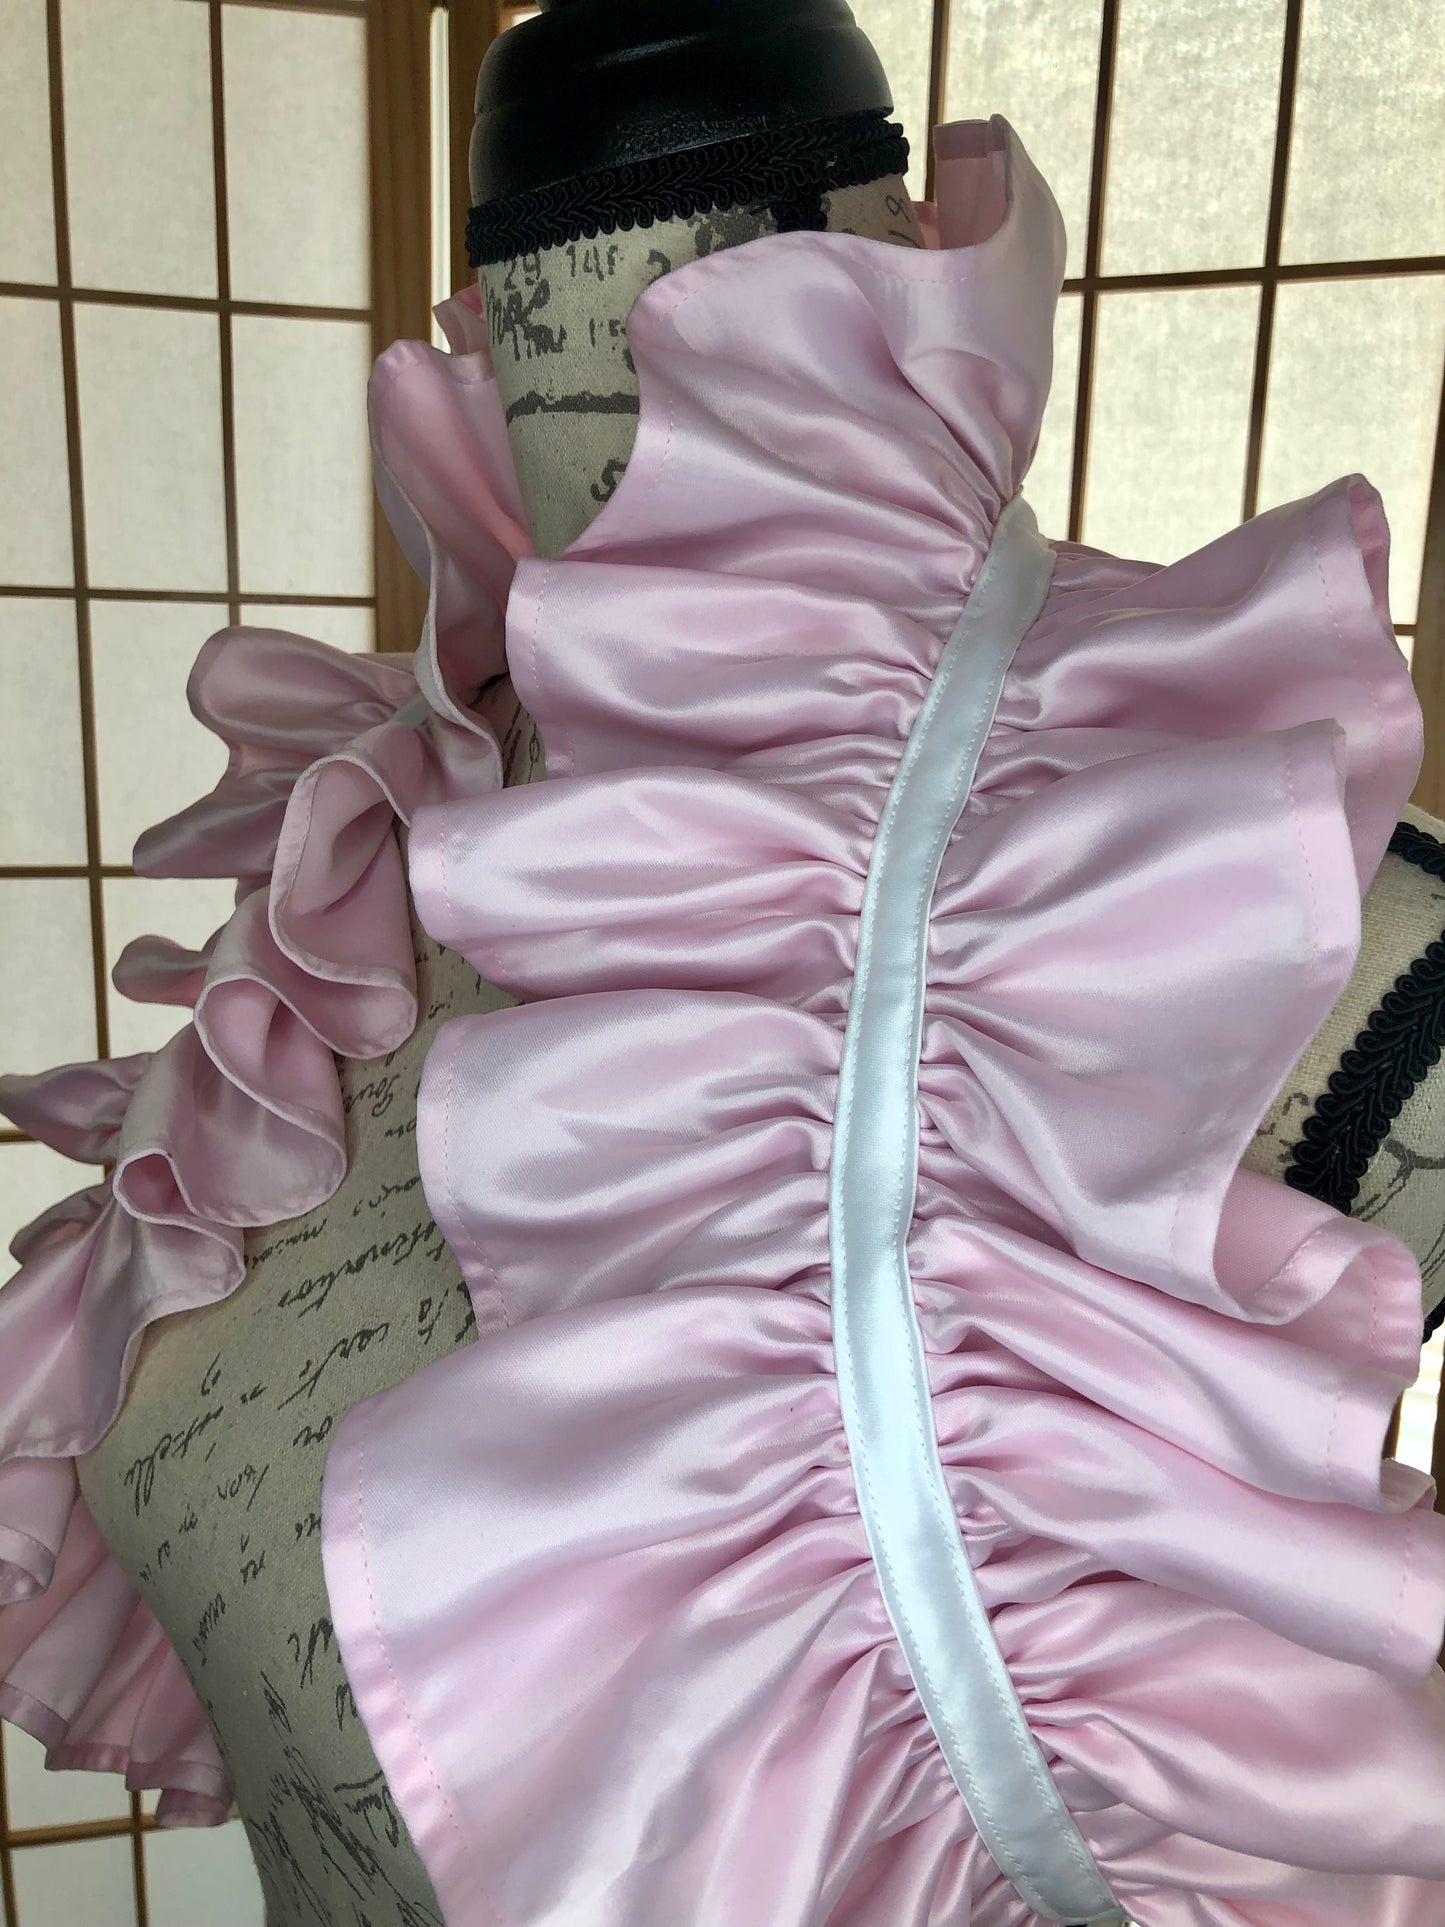 Erotic Queen Goddess Collar in Satin, Pink & White